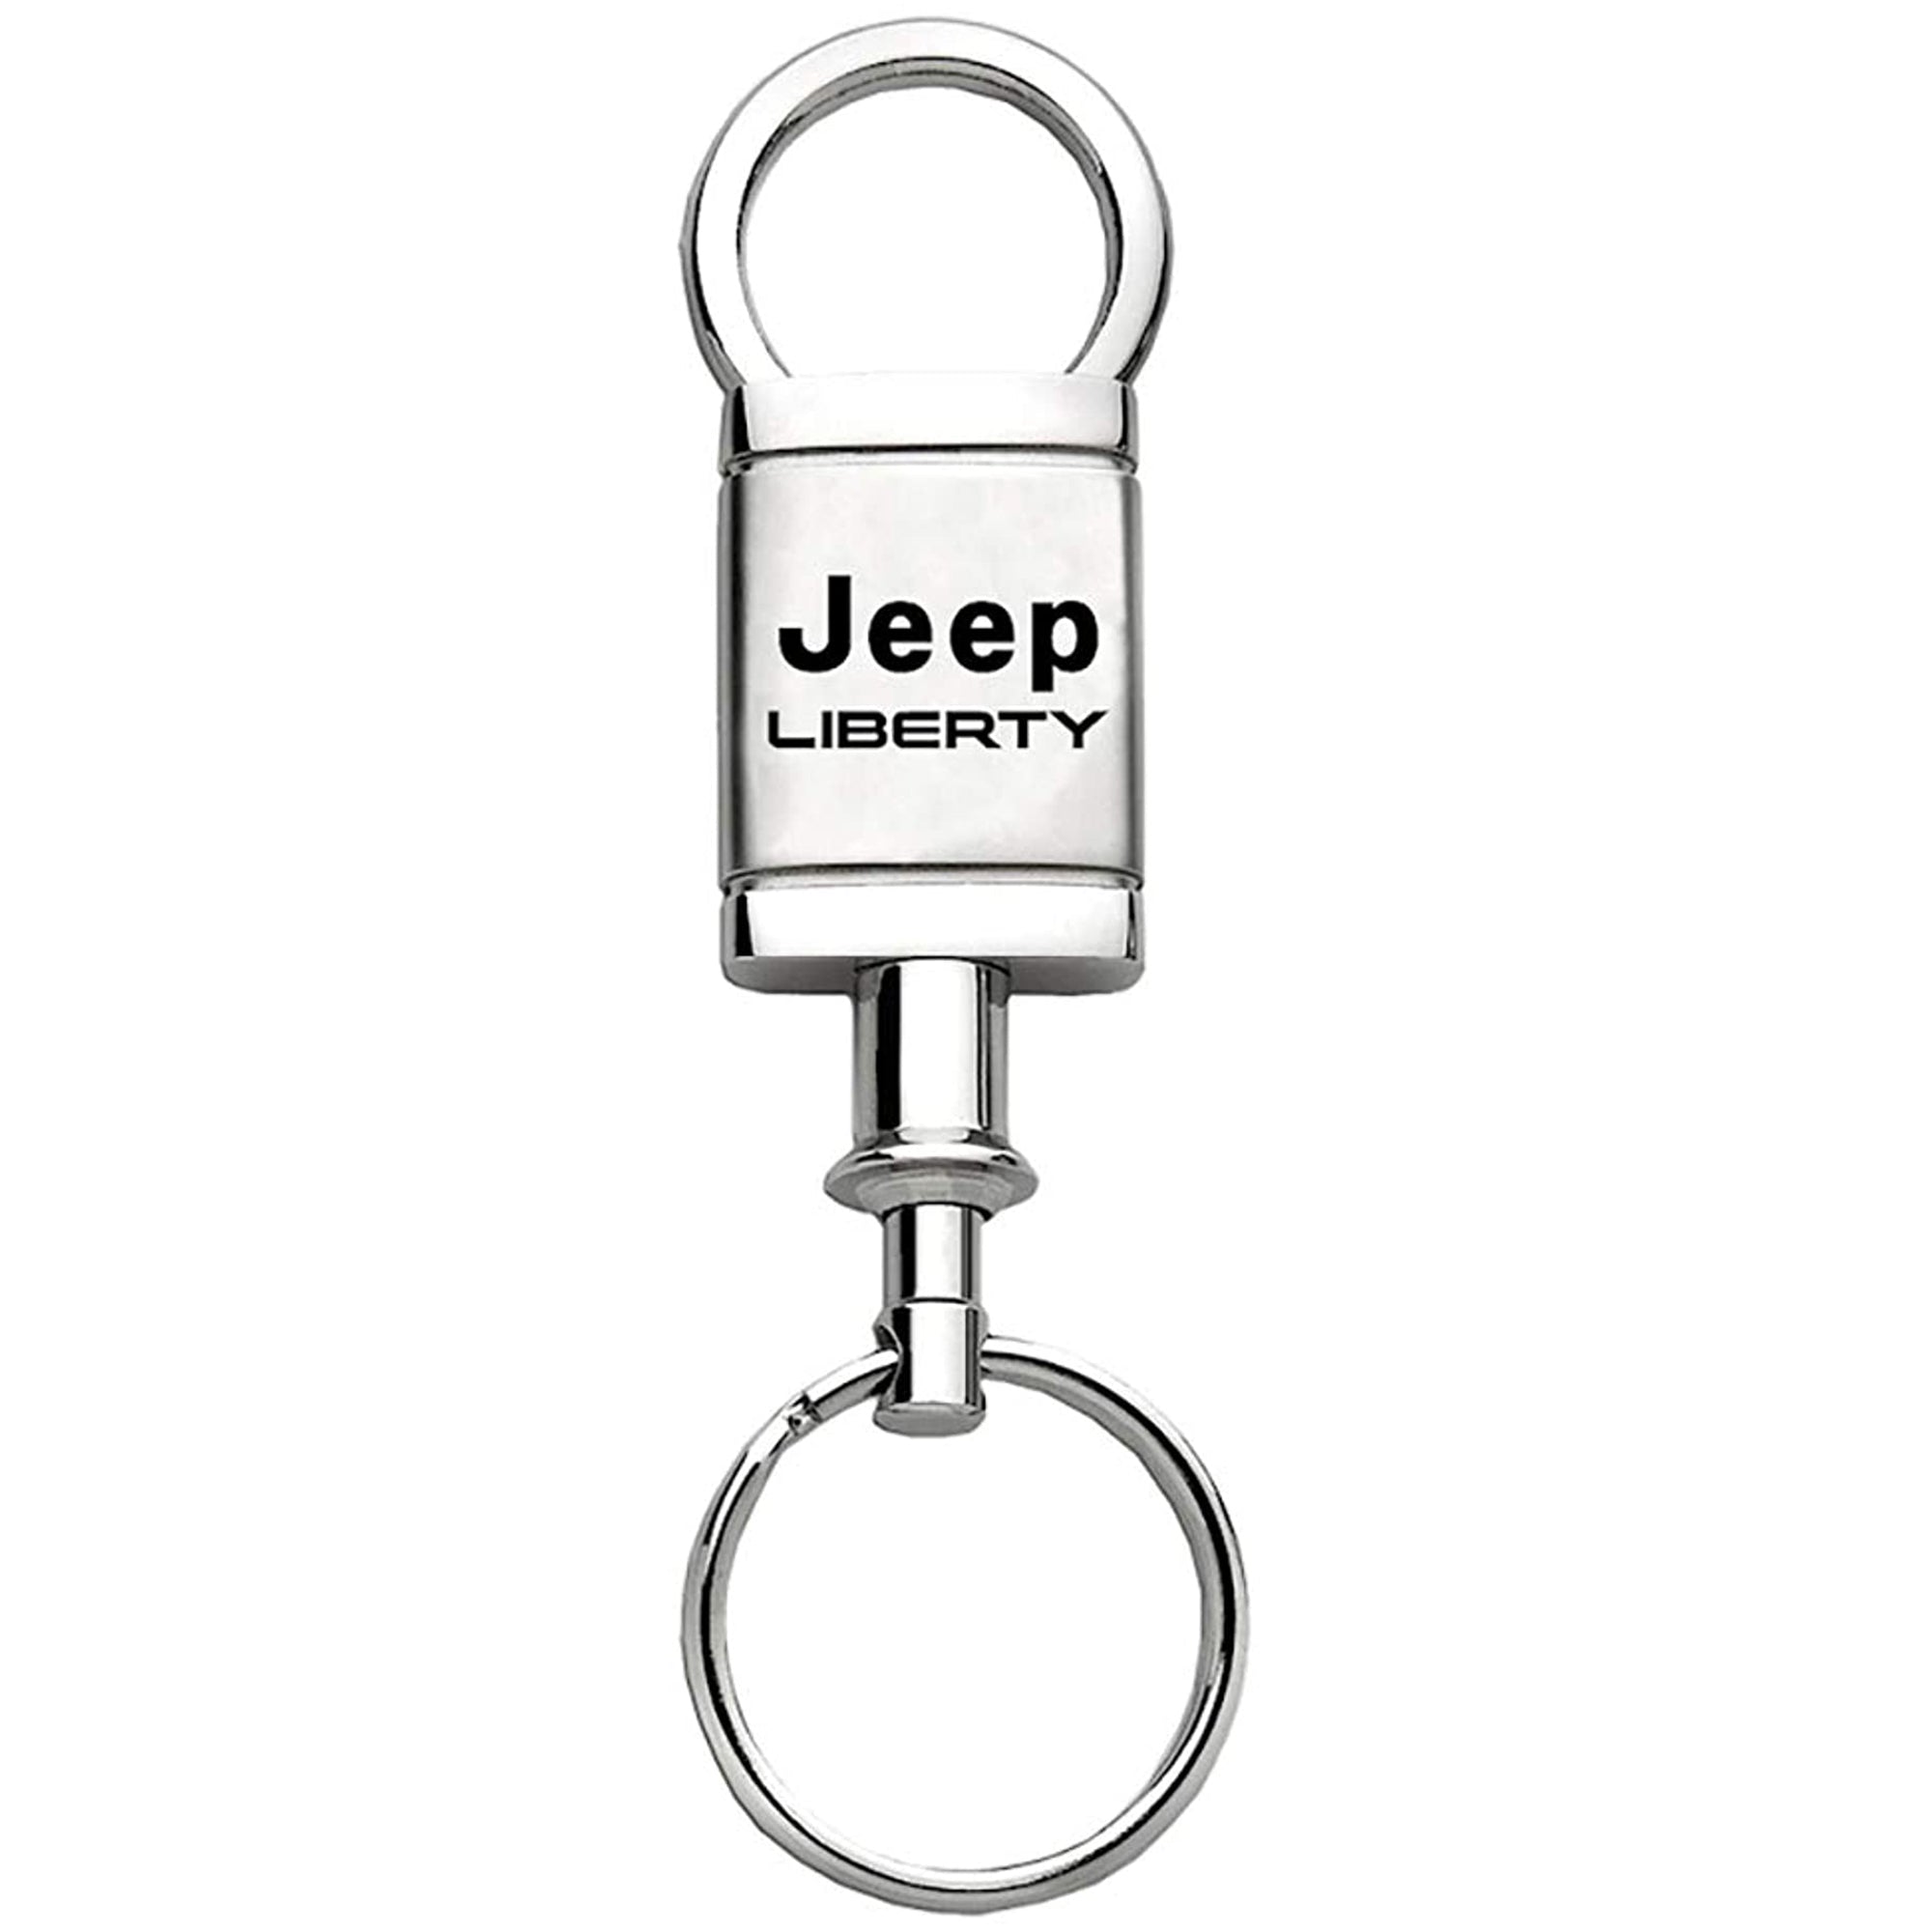 Jeep,Liberty,Key Chain